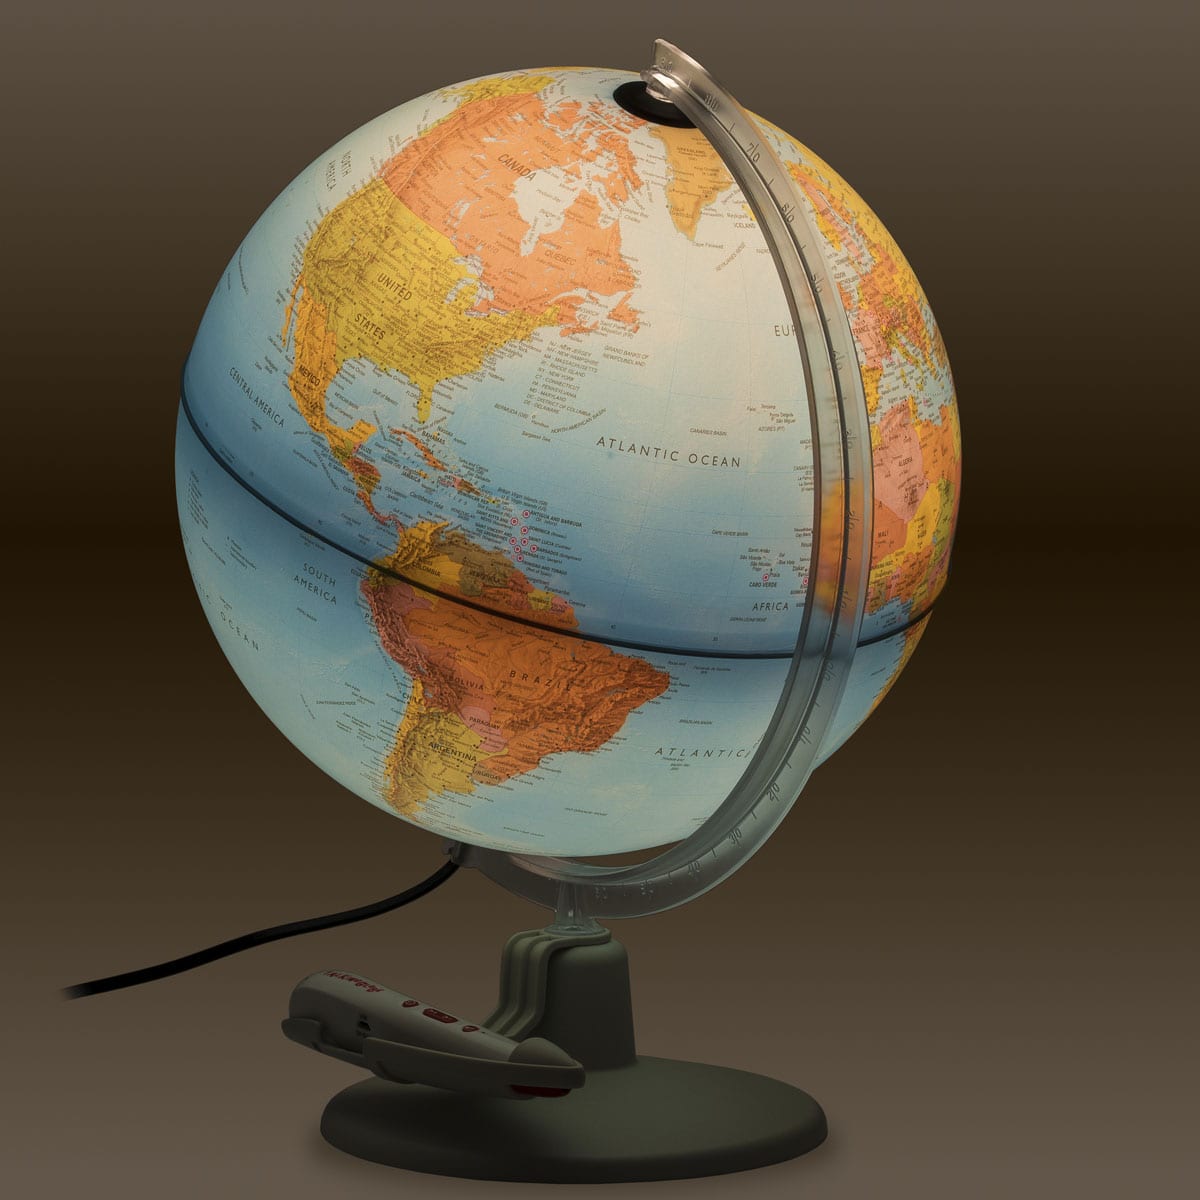 Parlamondo Interactive Globe - WP19101 - Ultimate Globes